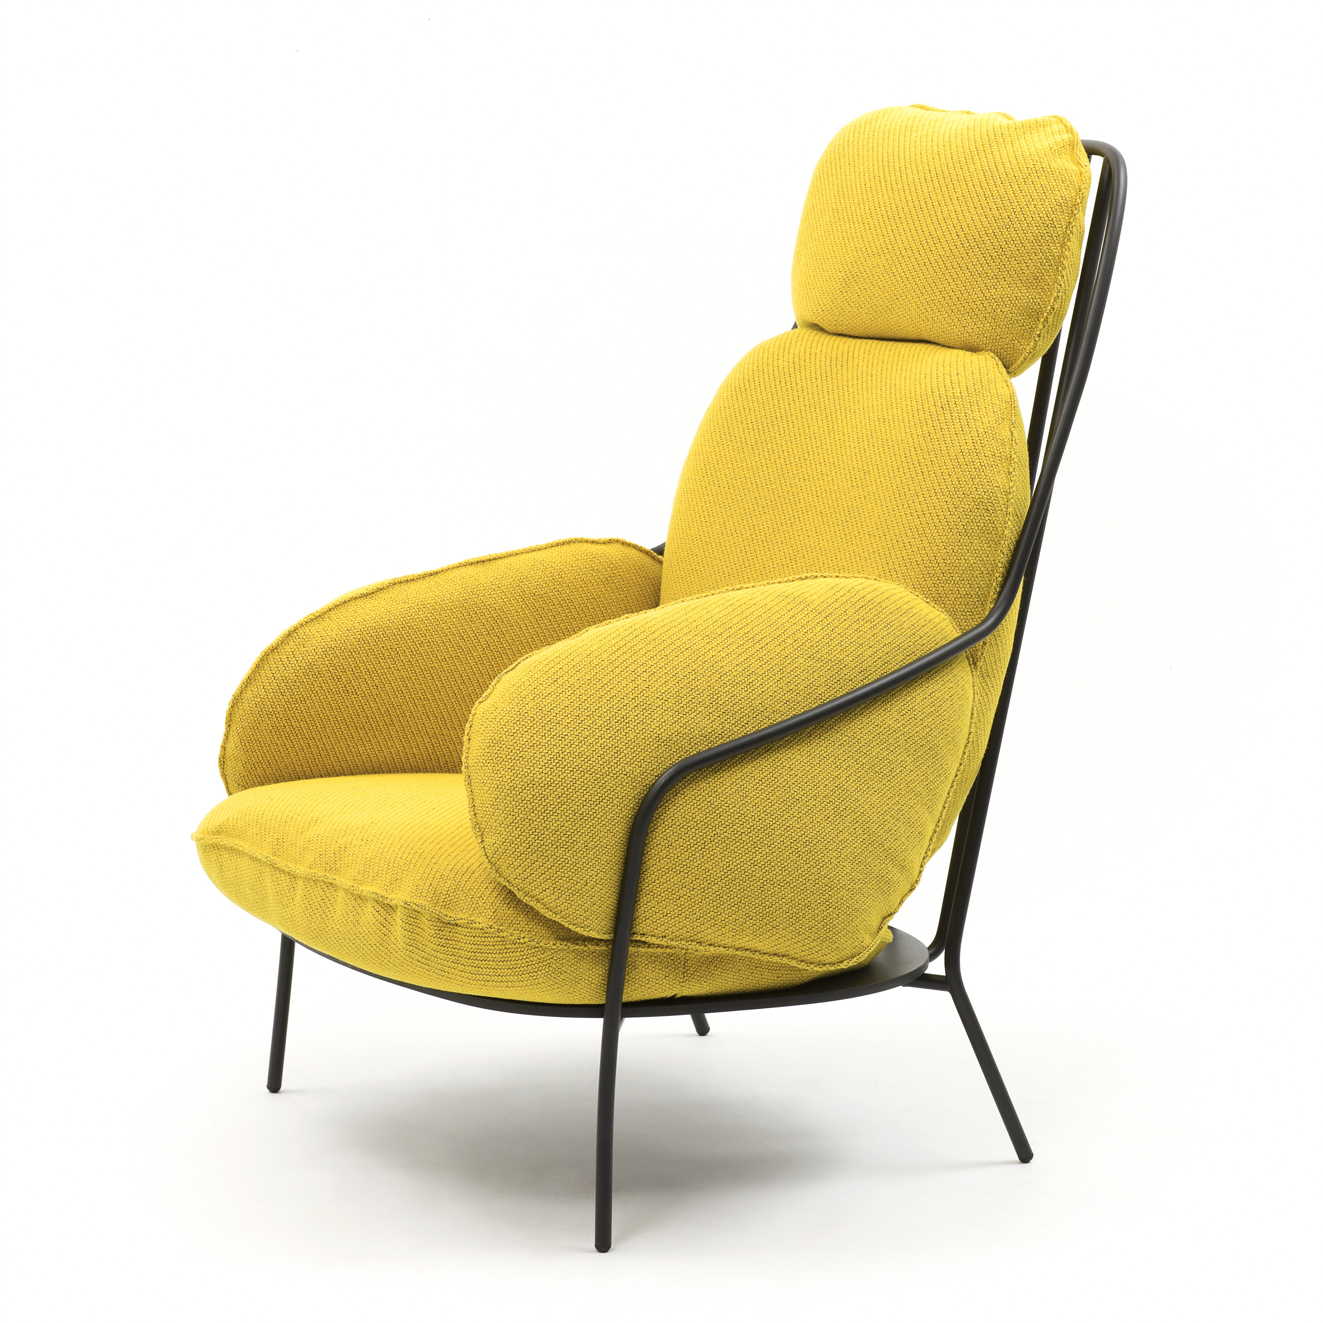 Paffuta Lounge Chair. Design by Luca Nichetto.